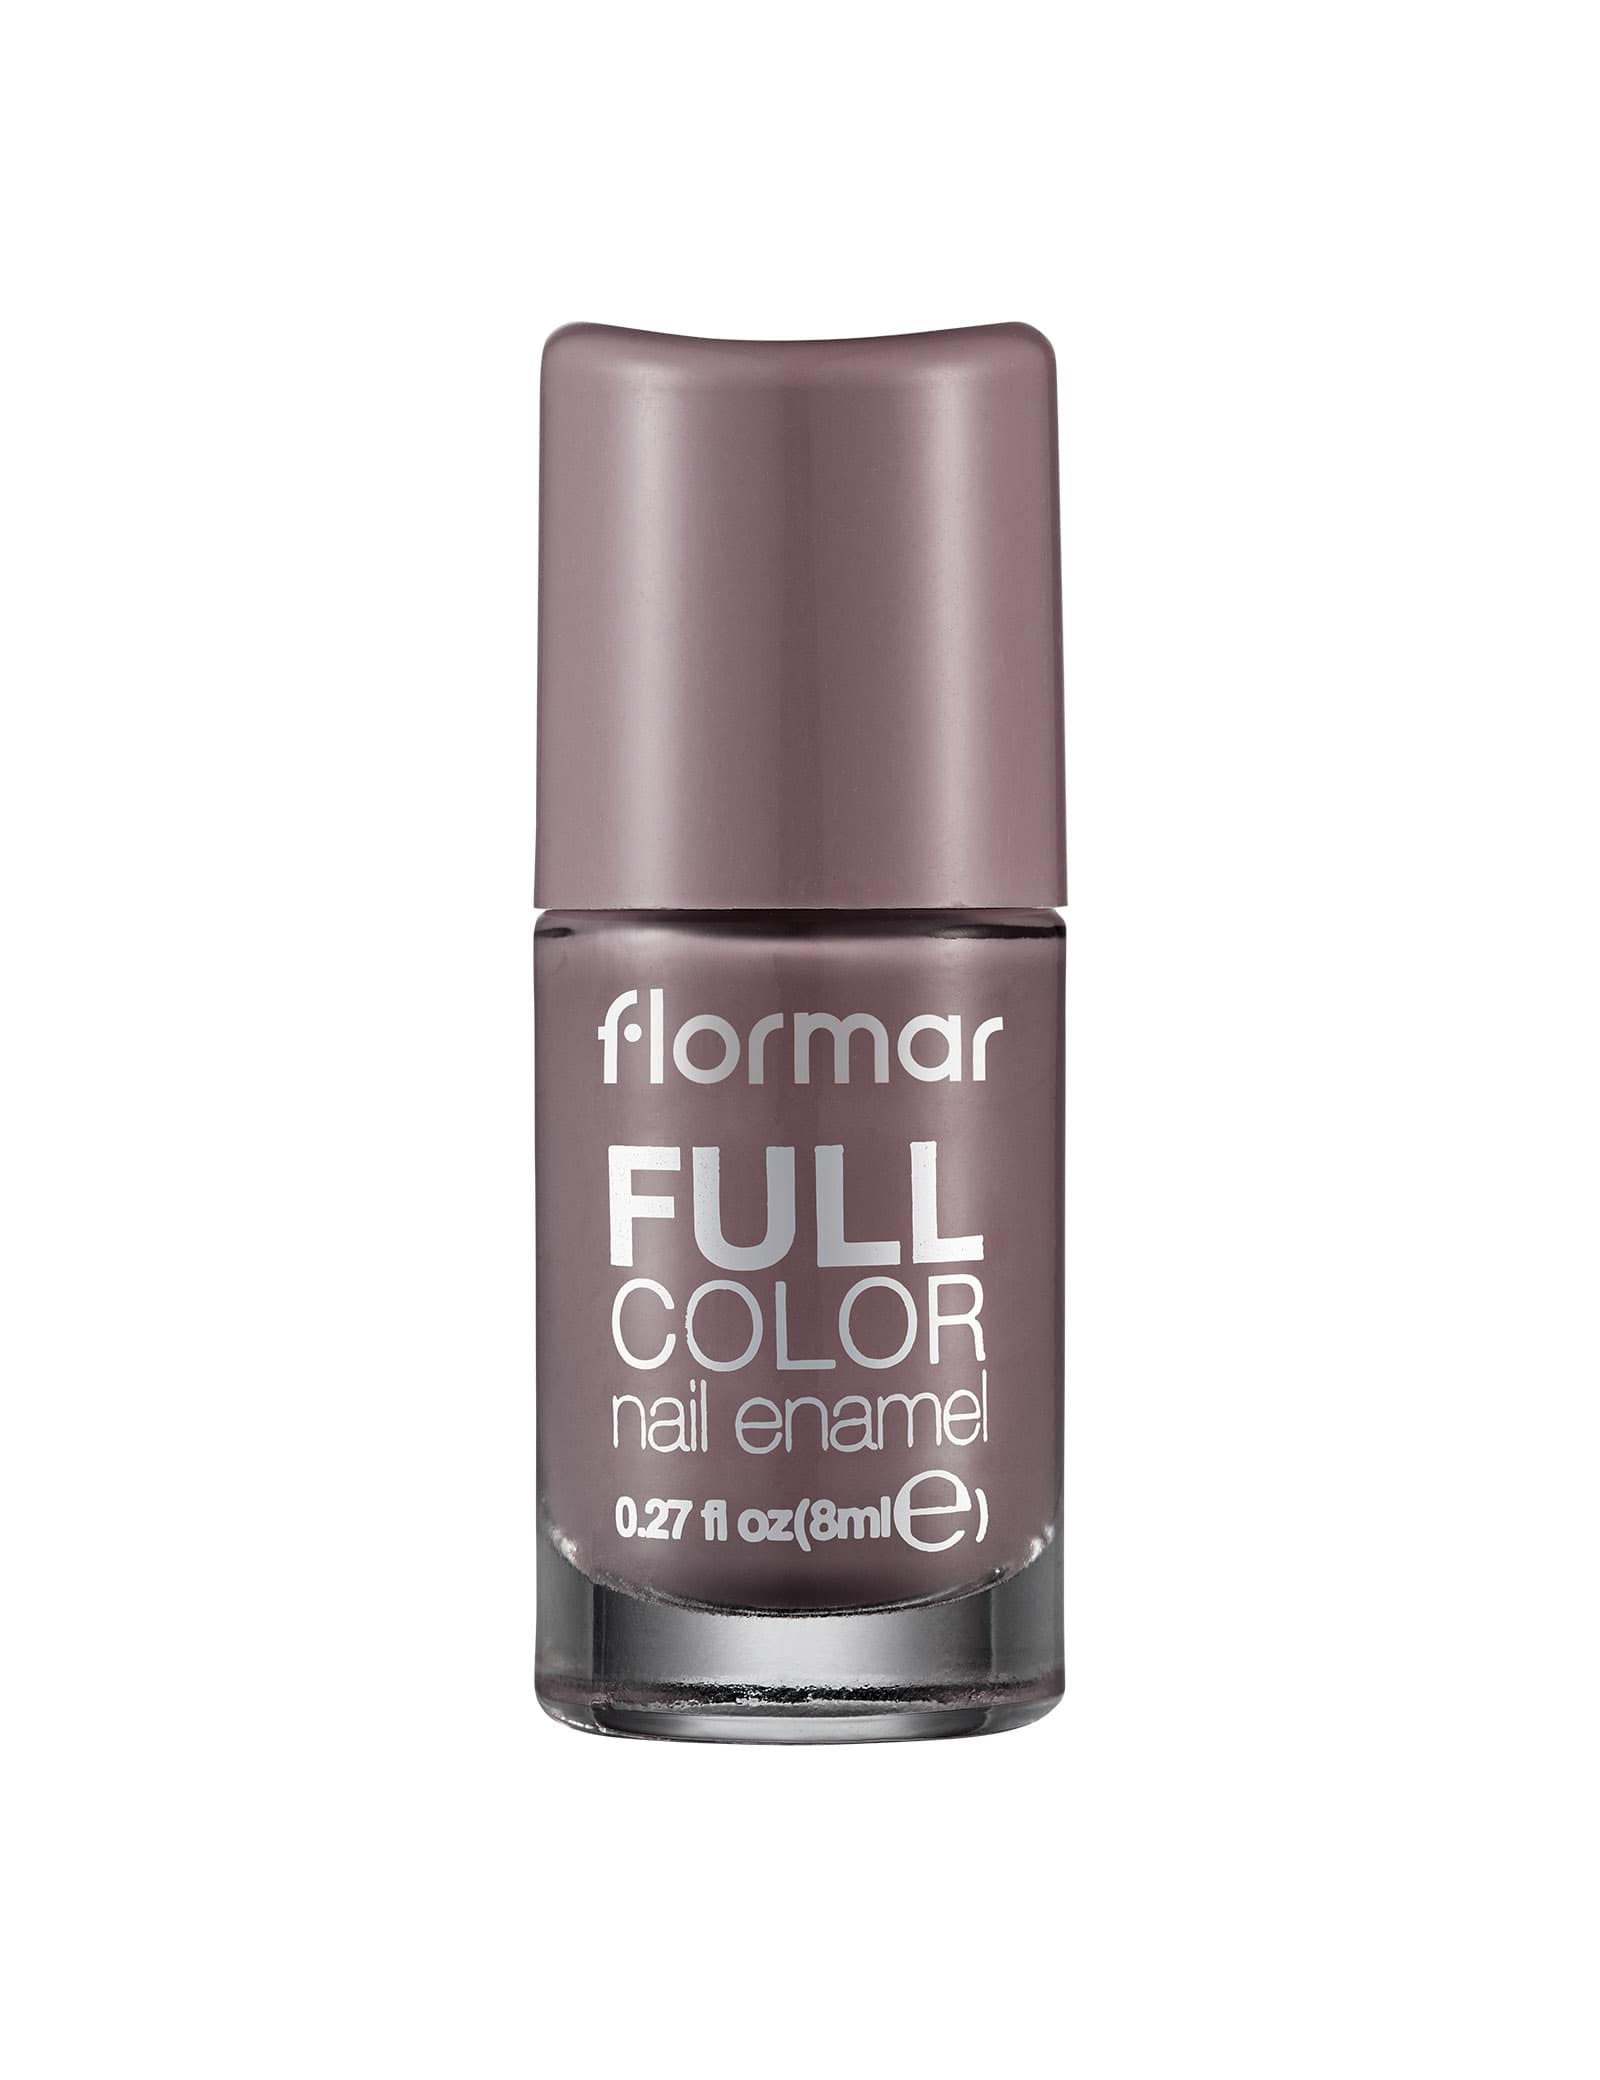 Flormar Perfect Coverage Liquid Concealer - Miazone